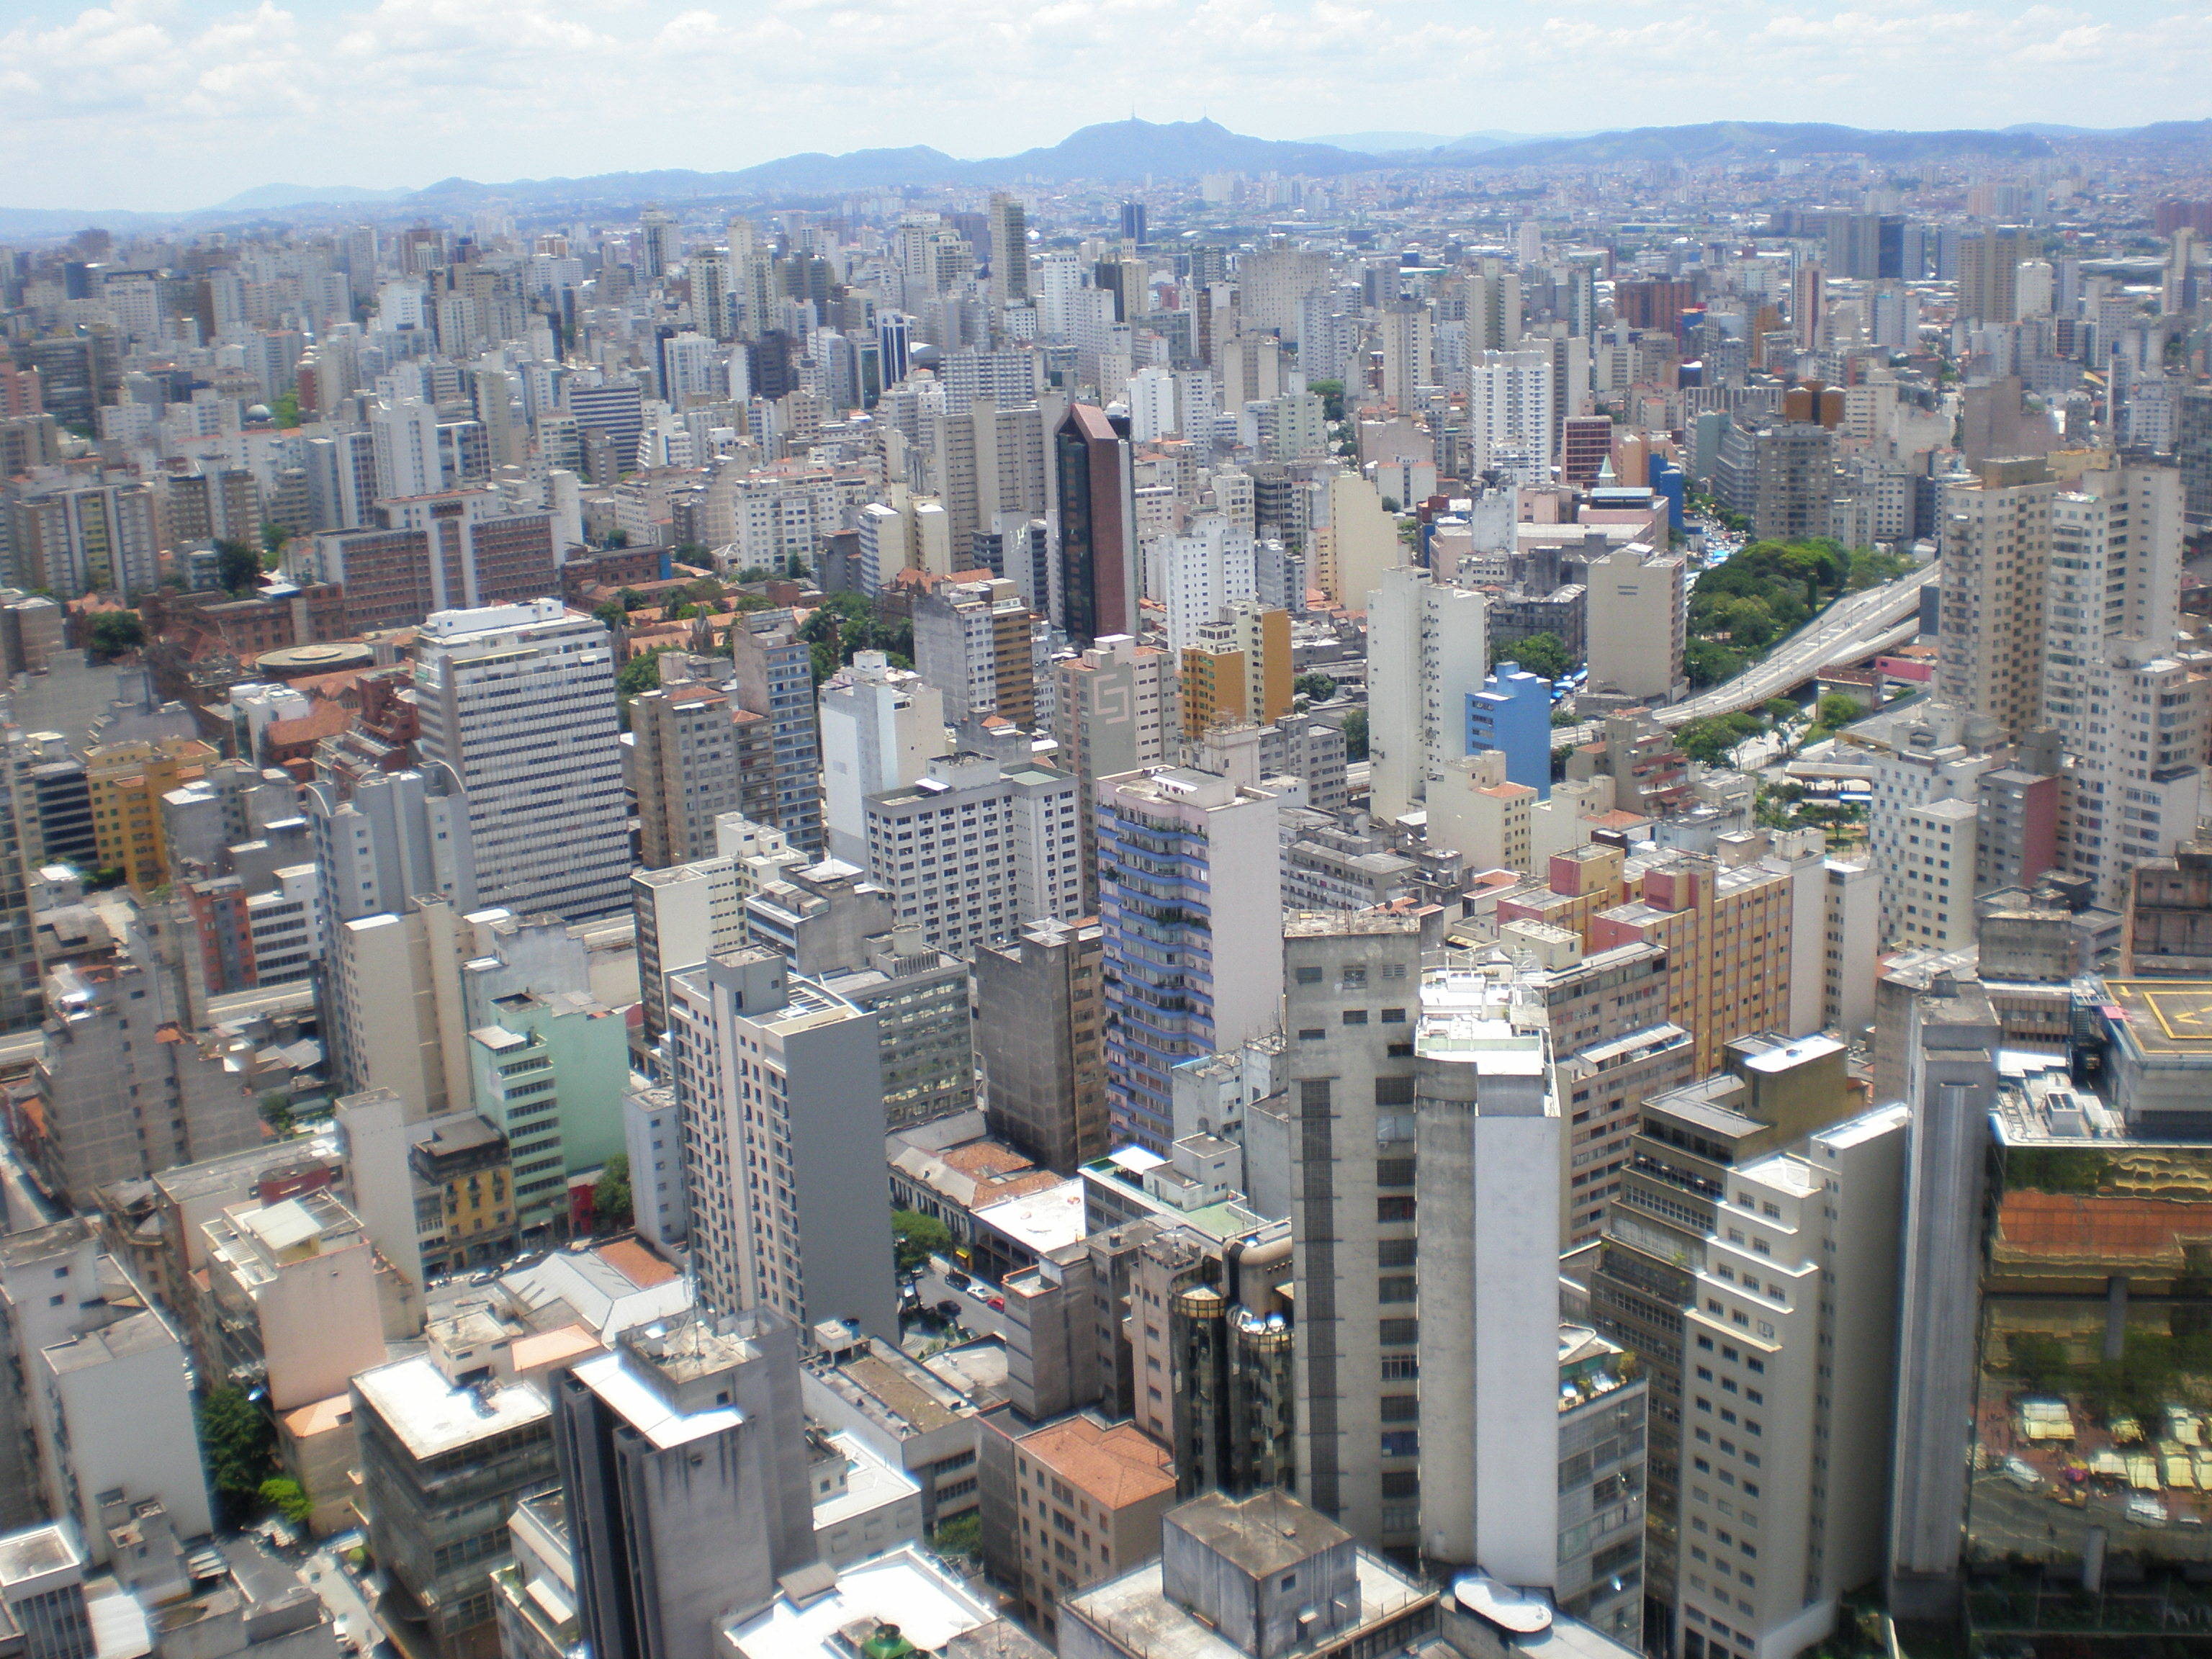 Sao-Paulo-from-About-dot-com.jpg